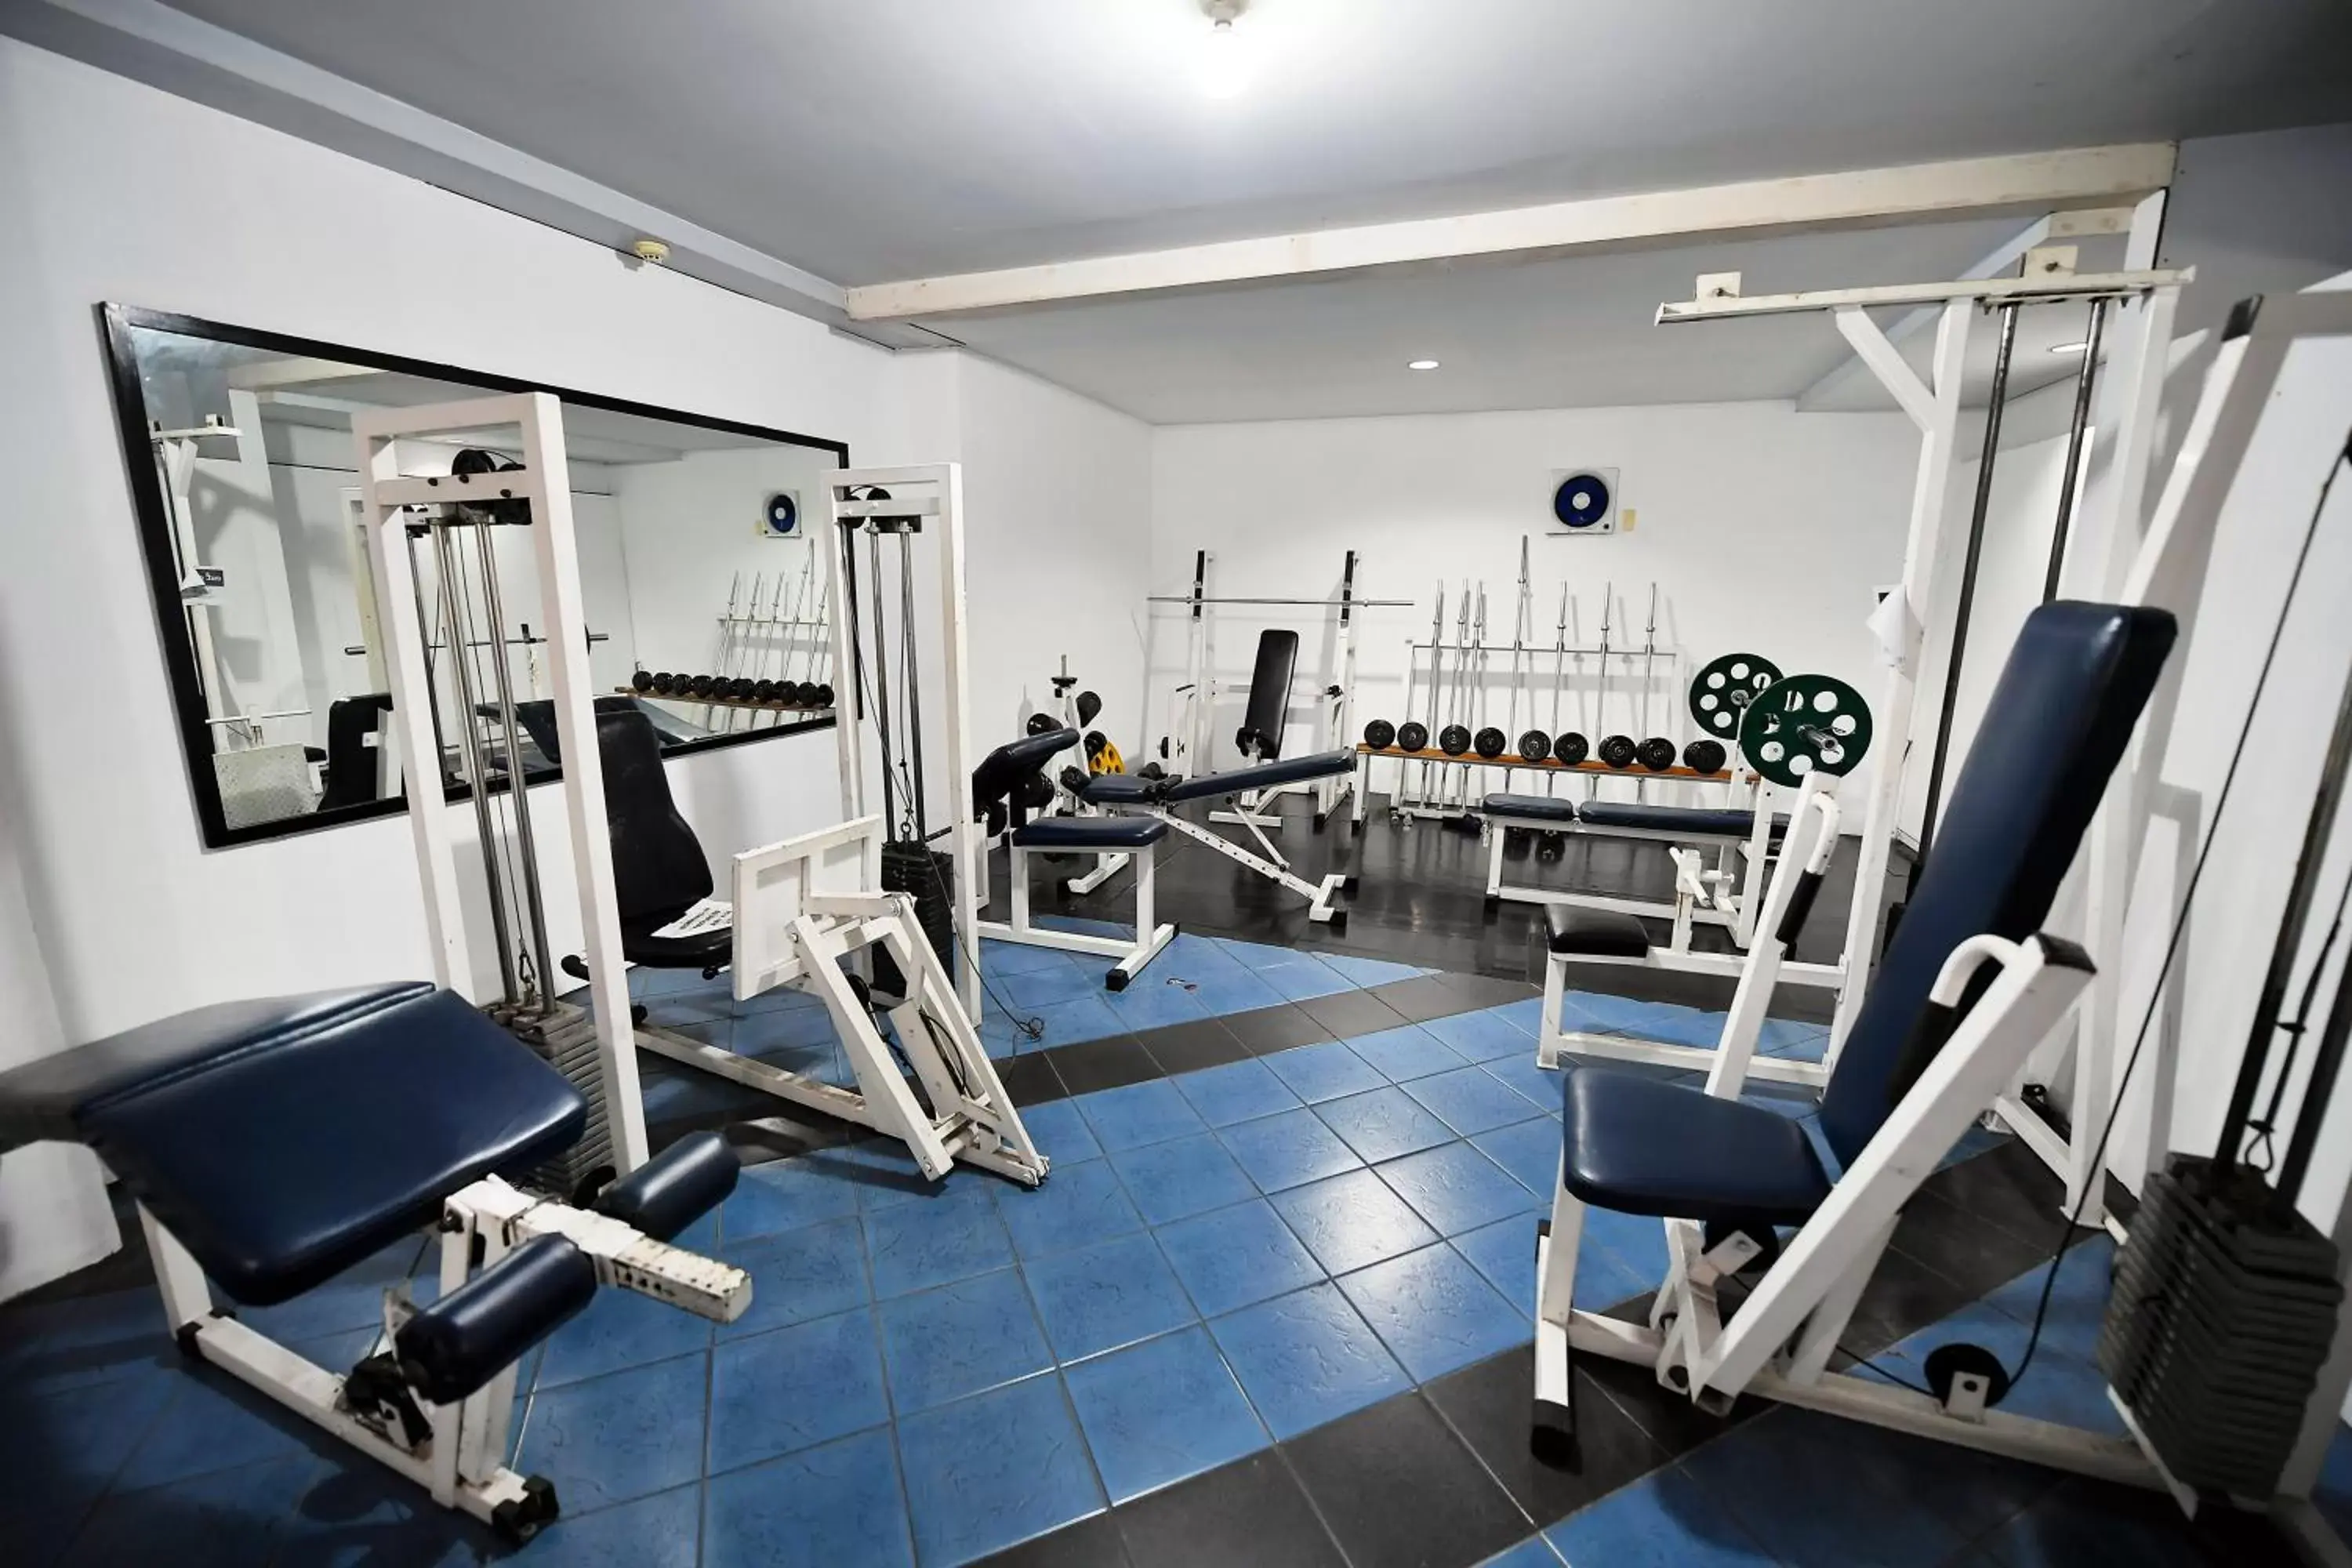 Fitness centre/facilities, Fitness Center/Facilities in Technopark Hotel